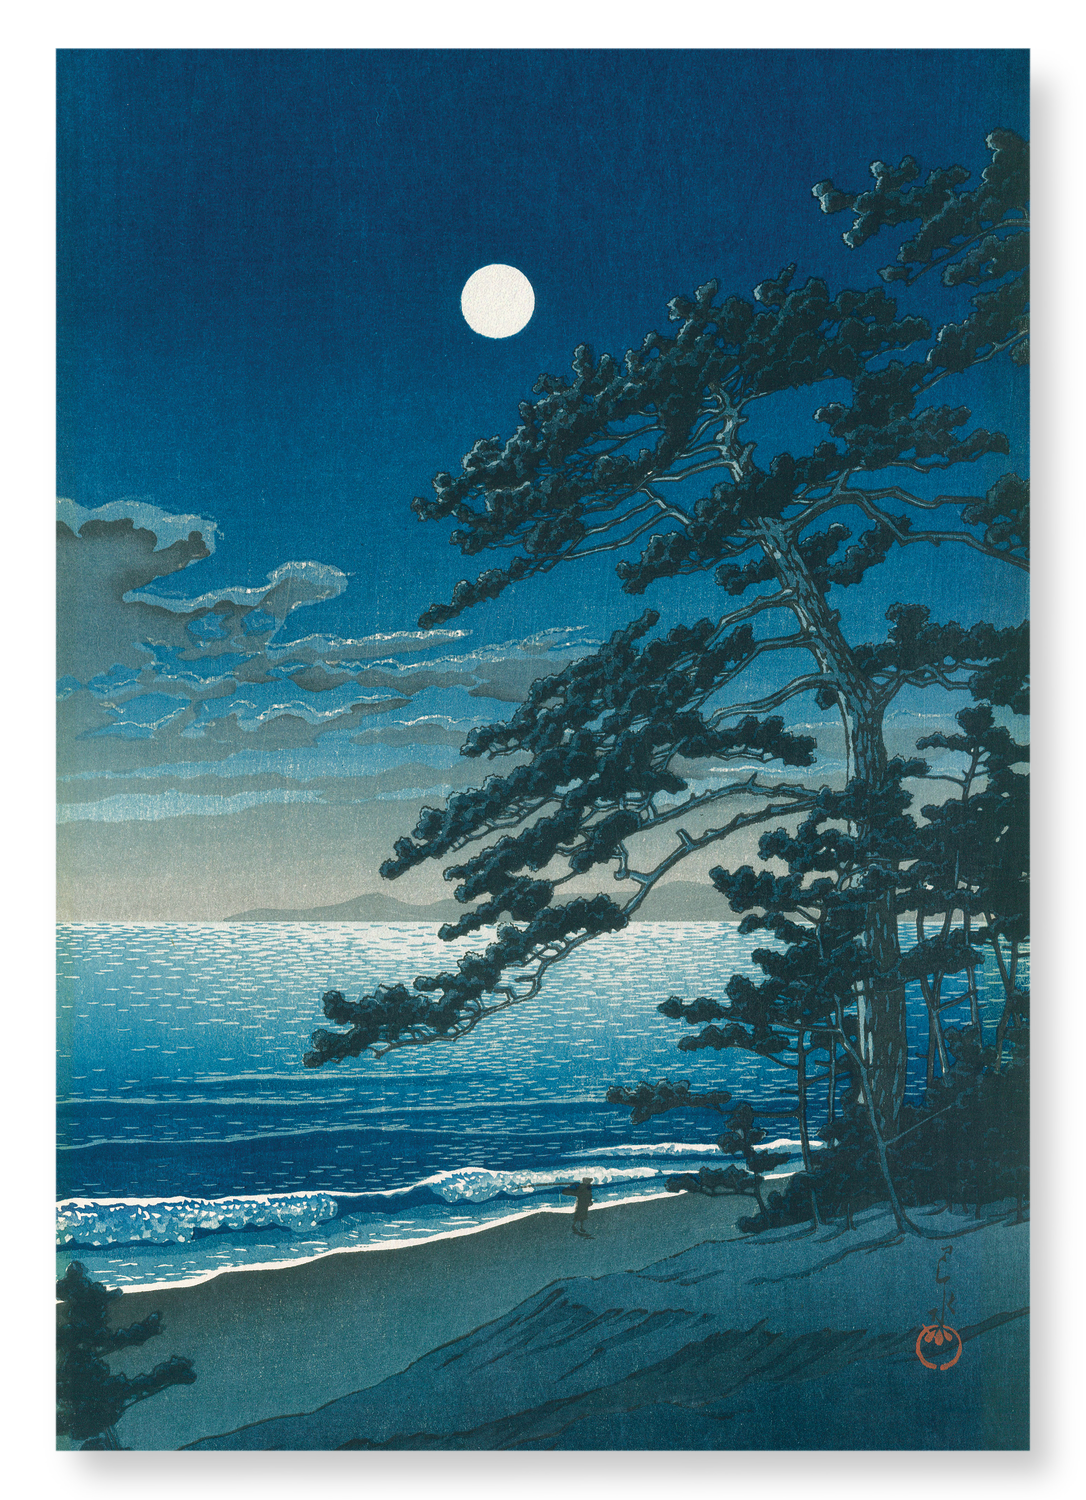 MOON AT NINOMIYA BEACH (1932)